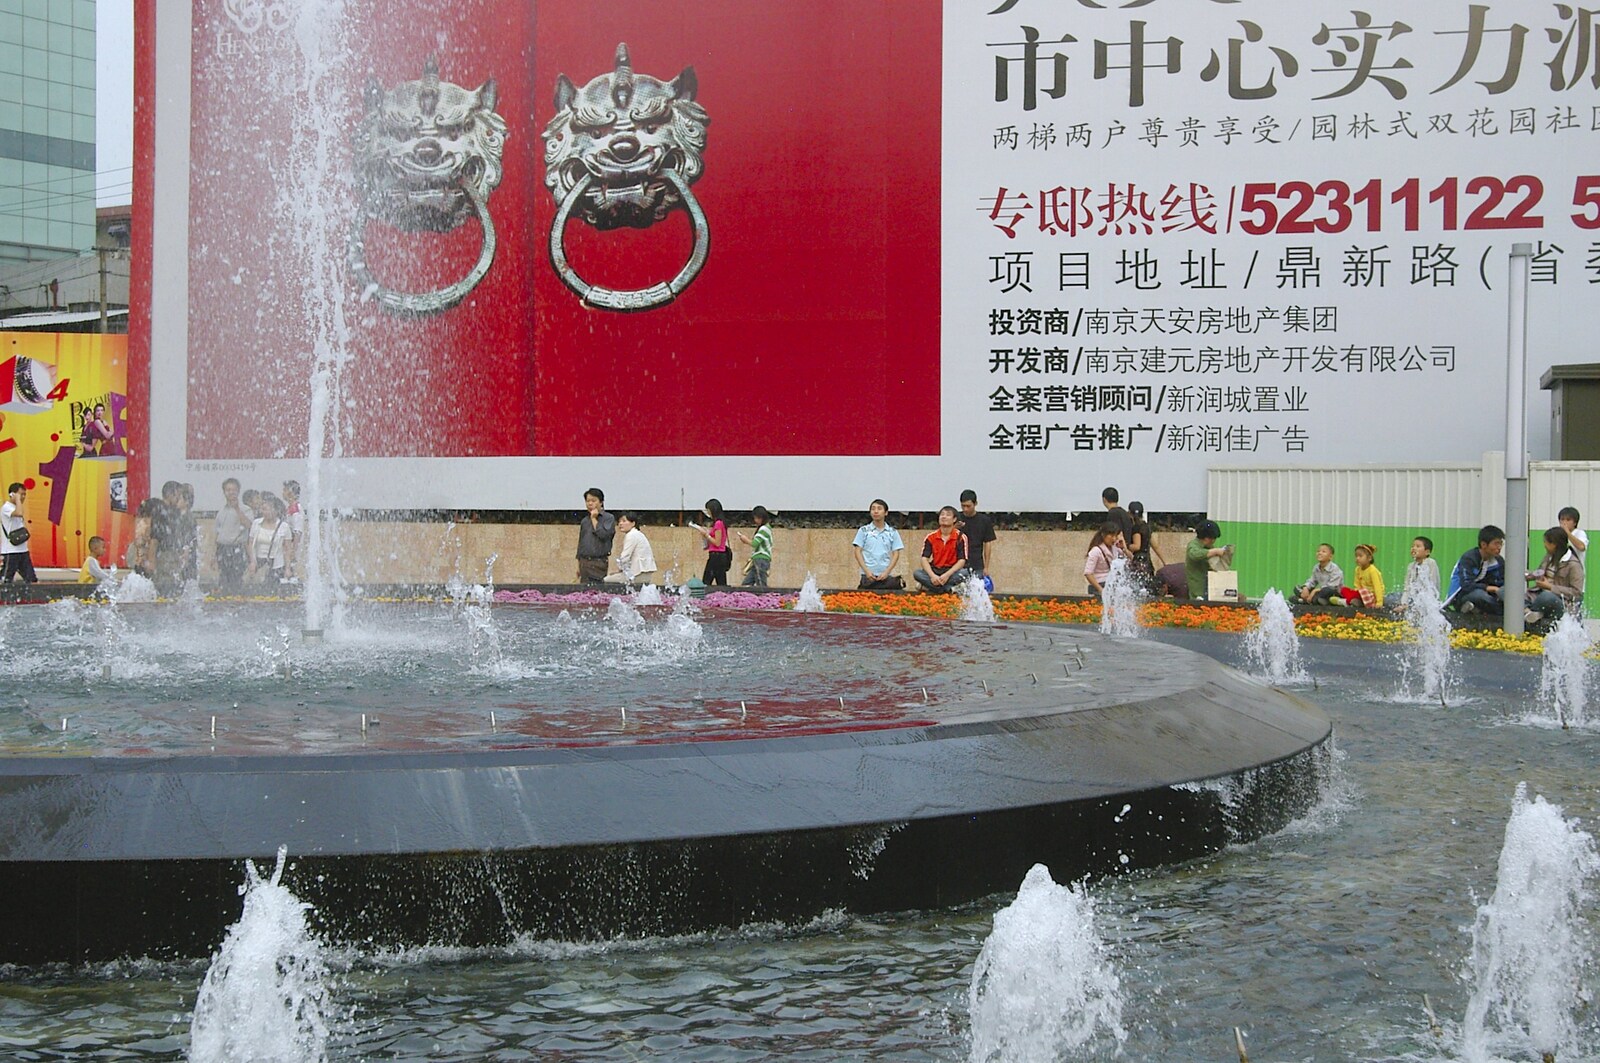 A musical fountain dances along to classical music from A Few Days in Nanjing, Jiangsu Province, China - 7th October 2006